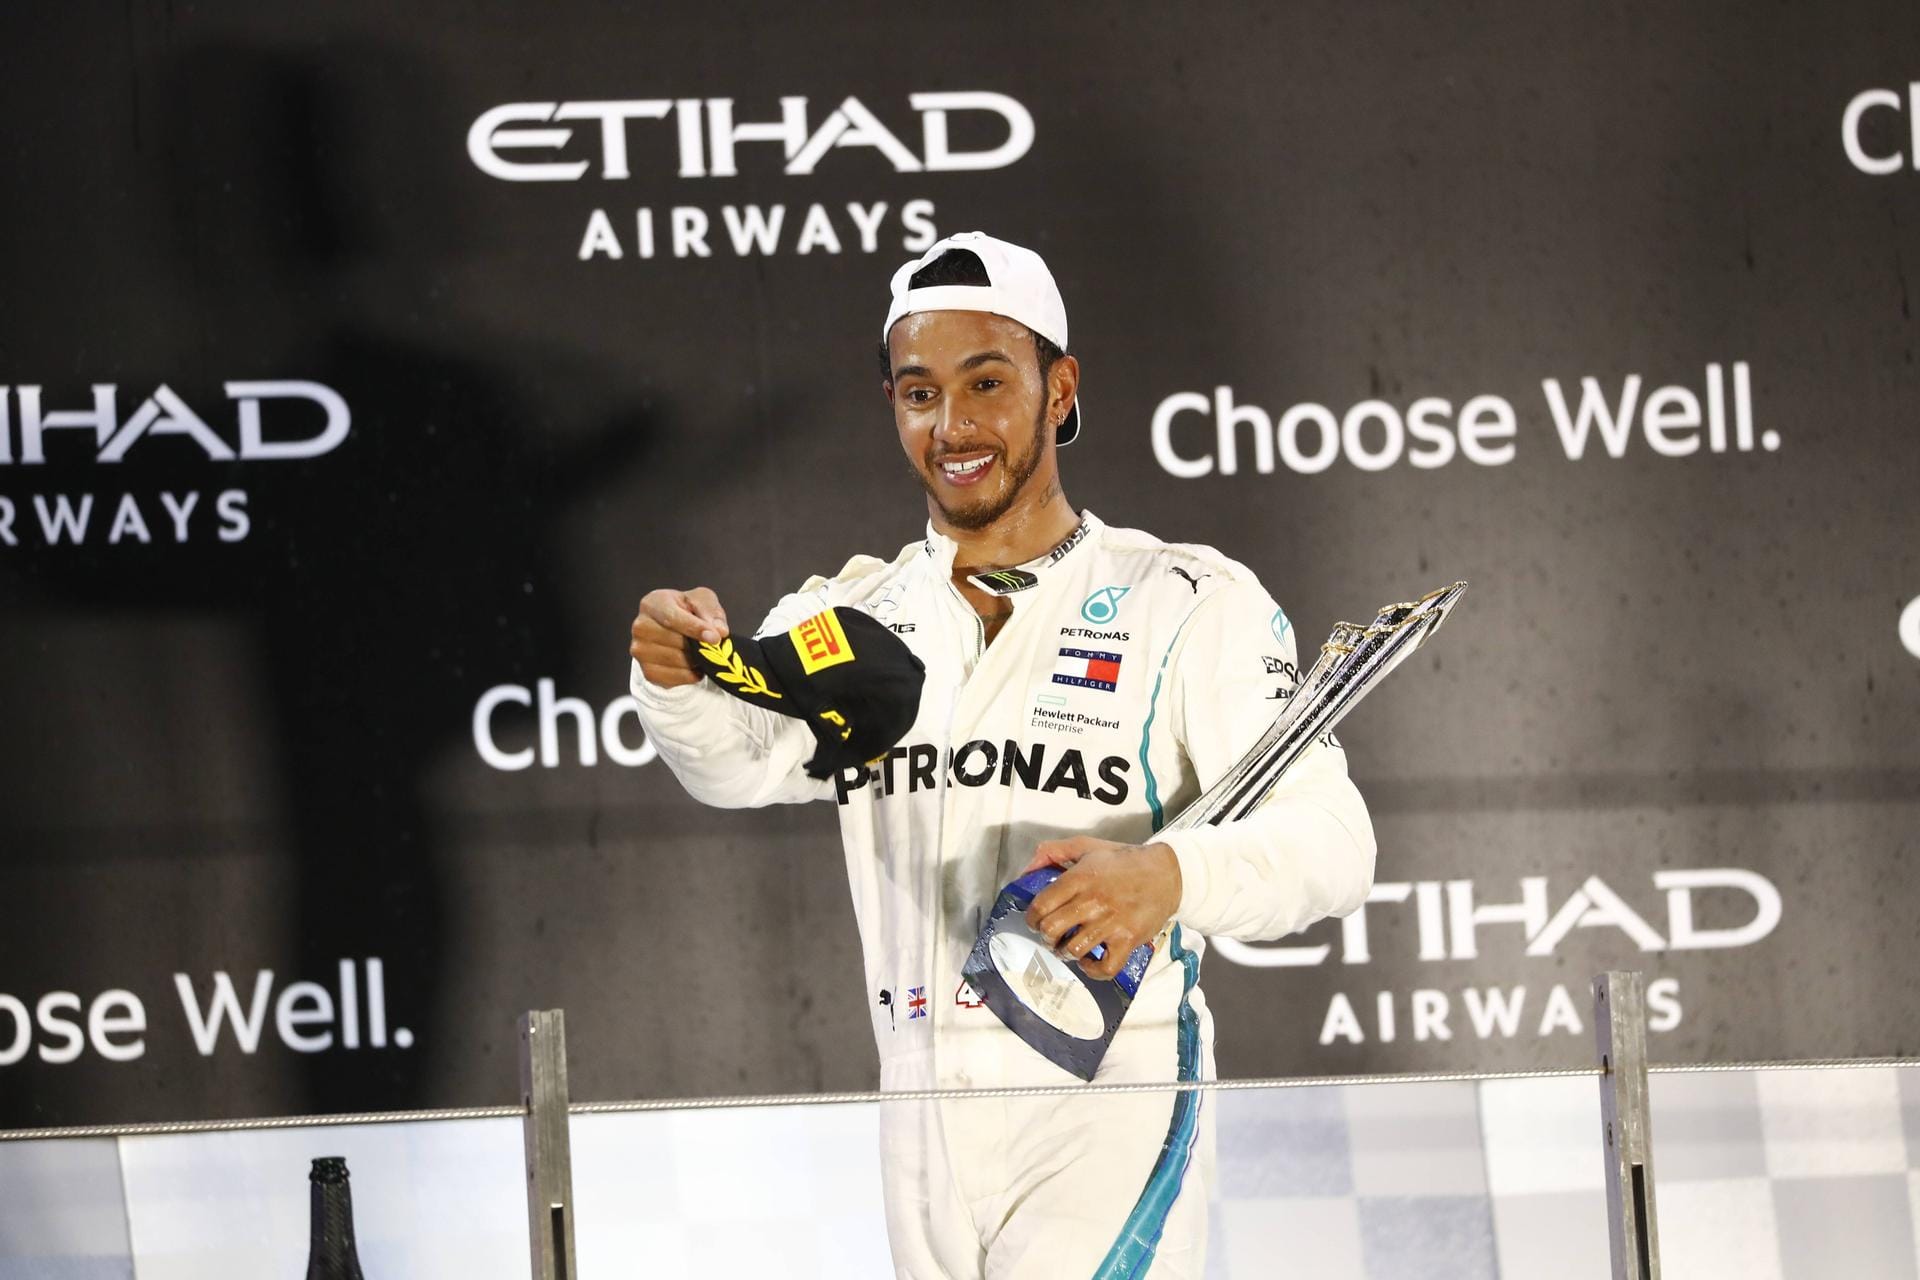 Mercedes: Lewis Hamilton